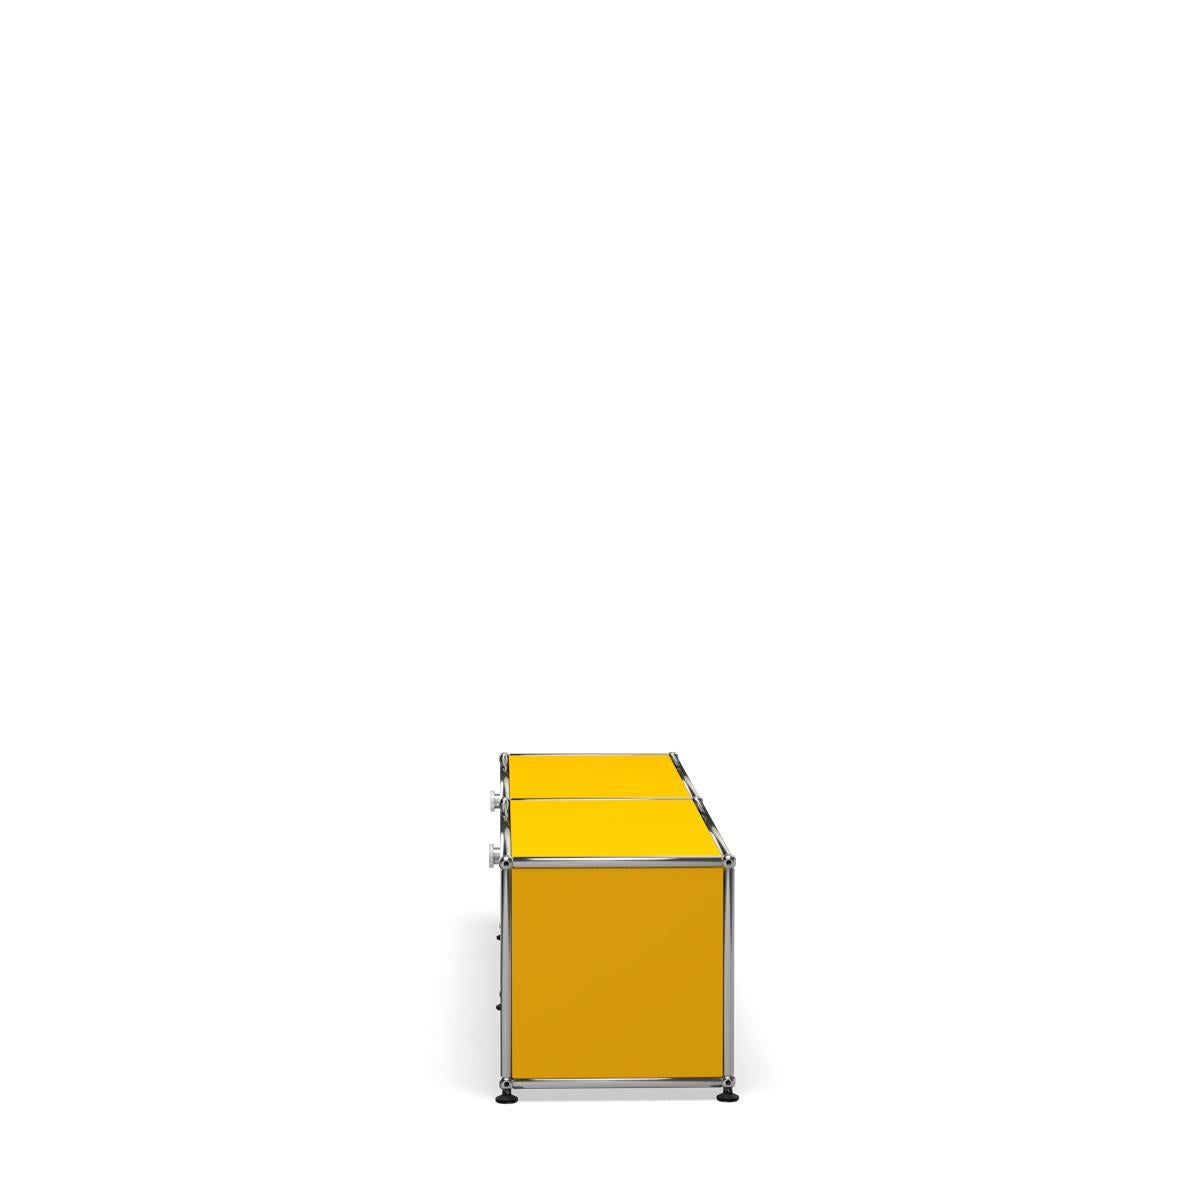 En vente : Yellow (Golden Yellow) Système de stockage USM Haller Media B218 3